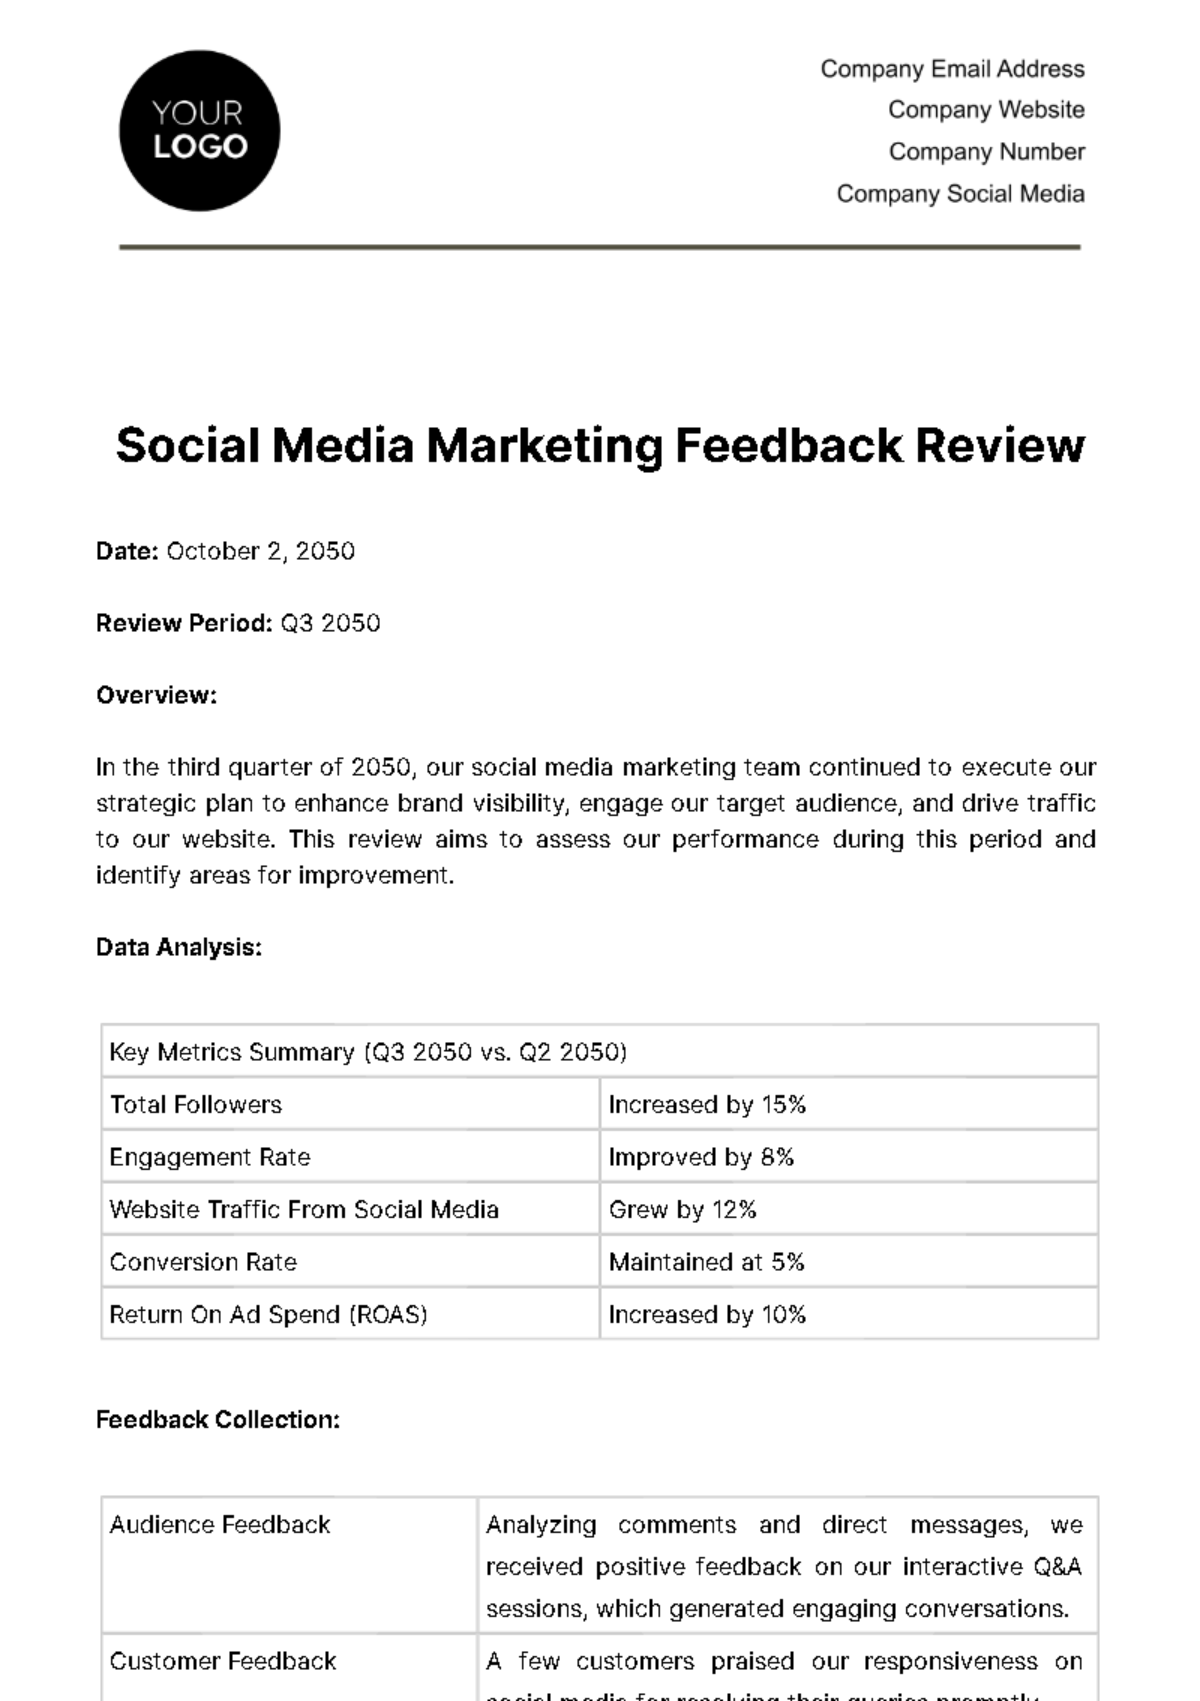 Social Media Marketing Feedback Review Template